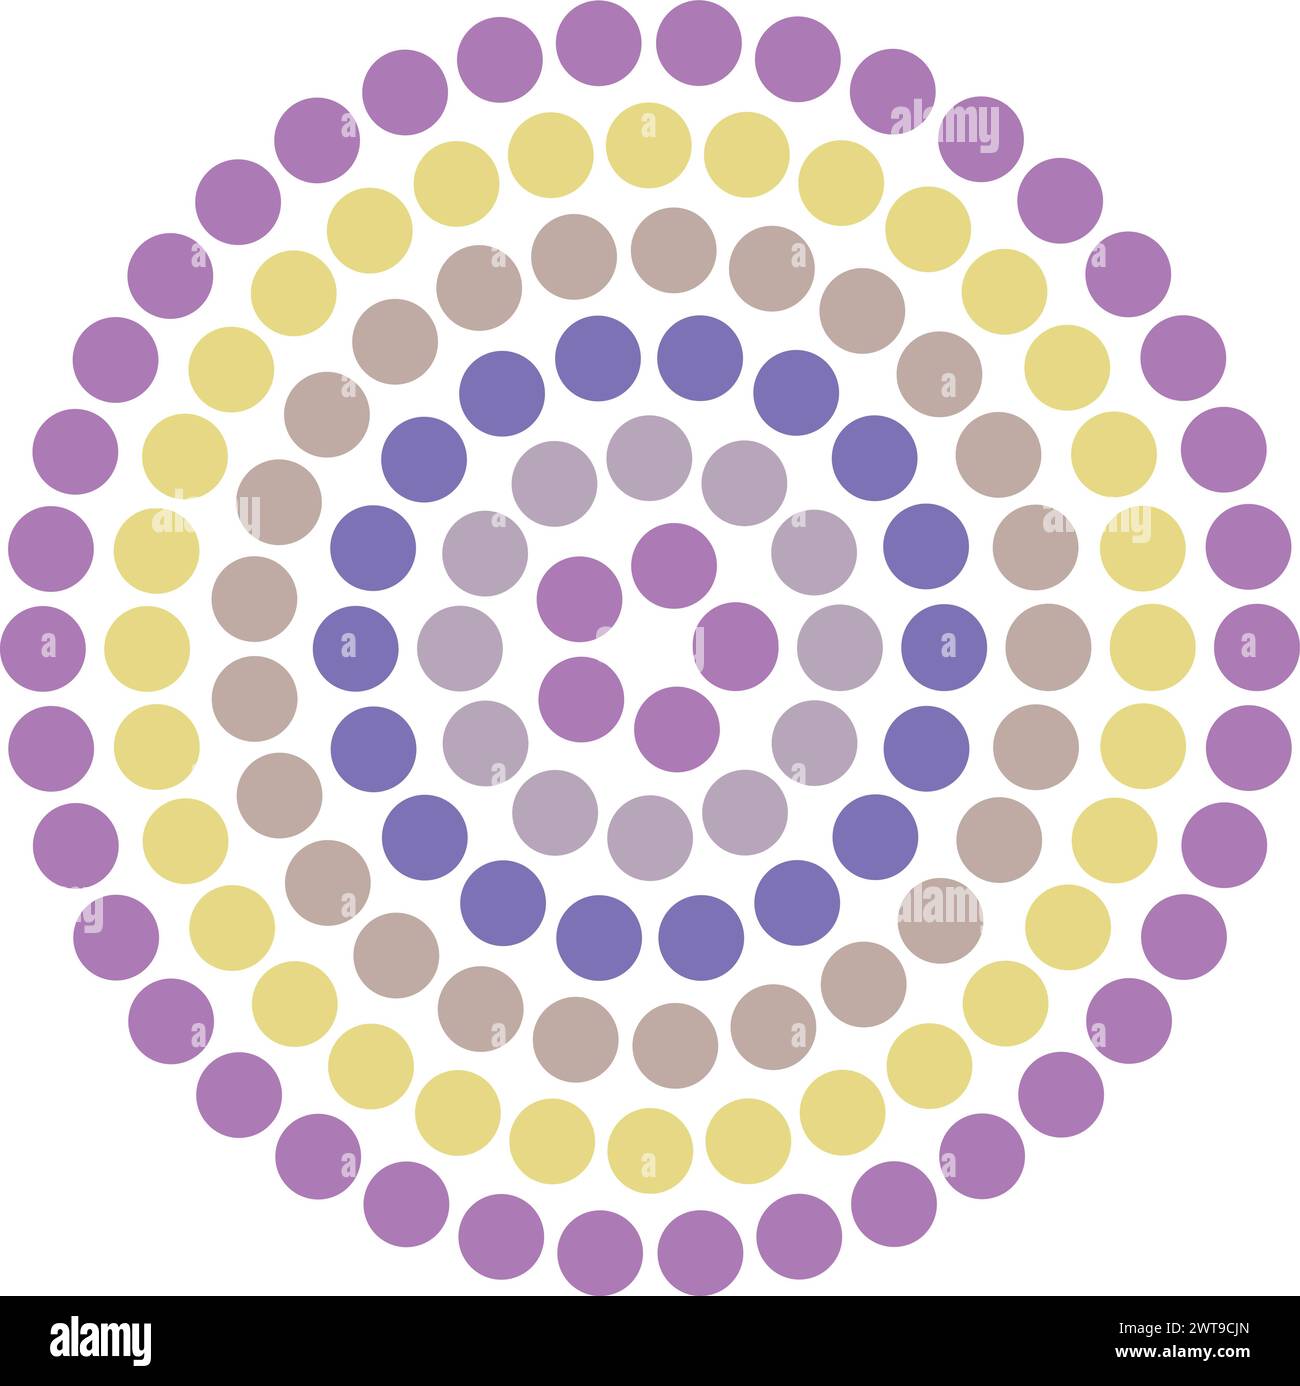 Farbmuster mit rundem Punkt. Kreisförmiges Mosaik Stock Vektor